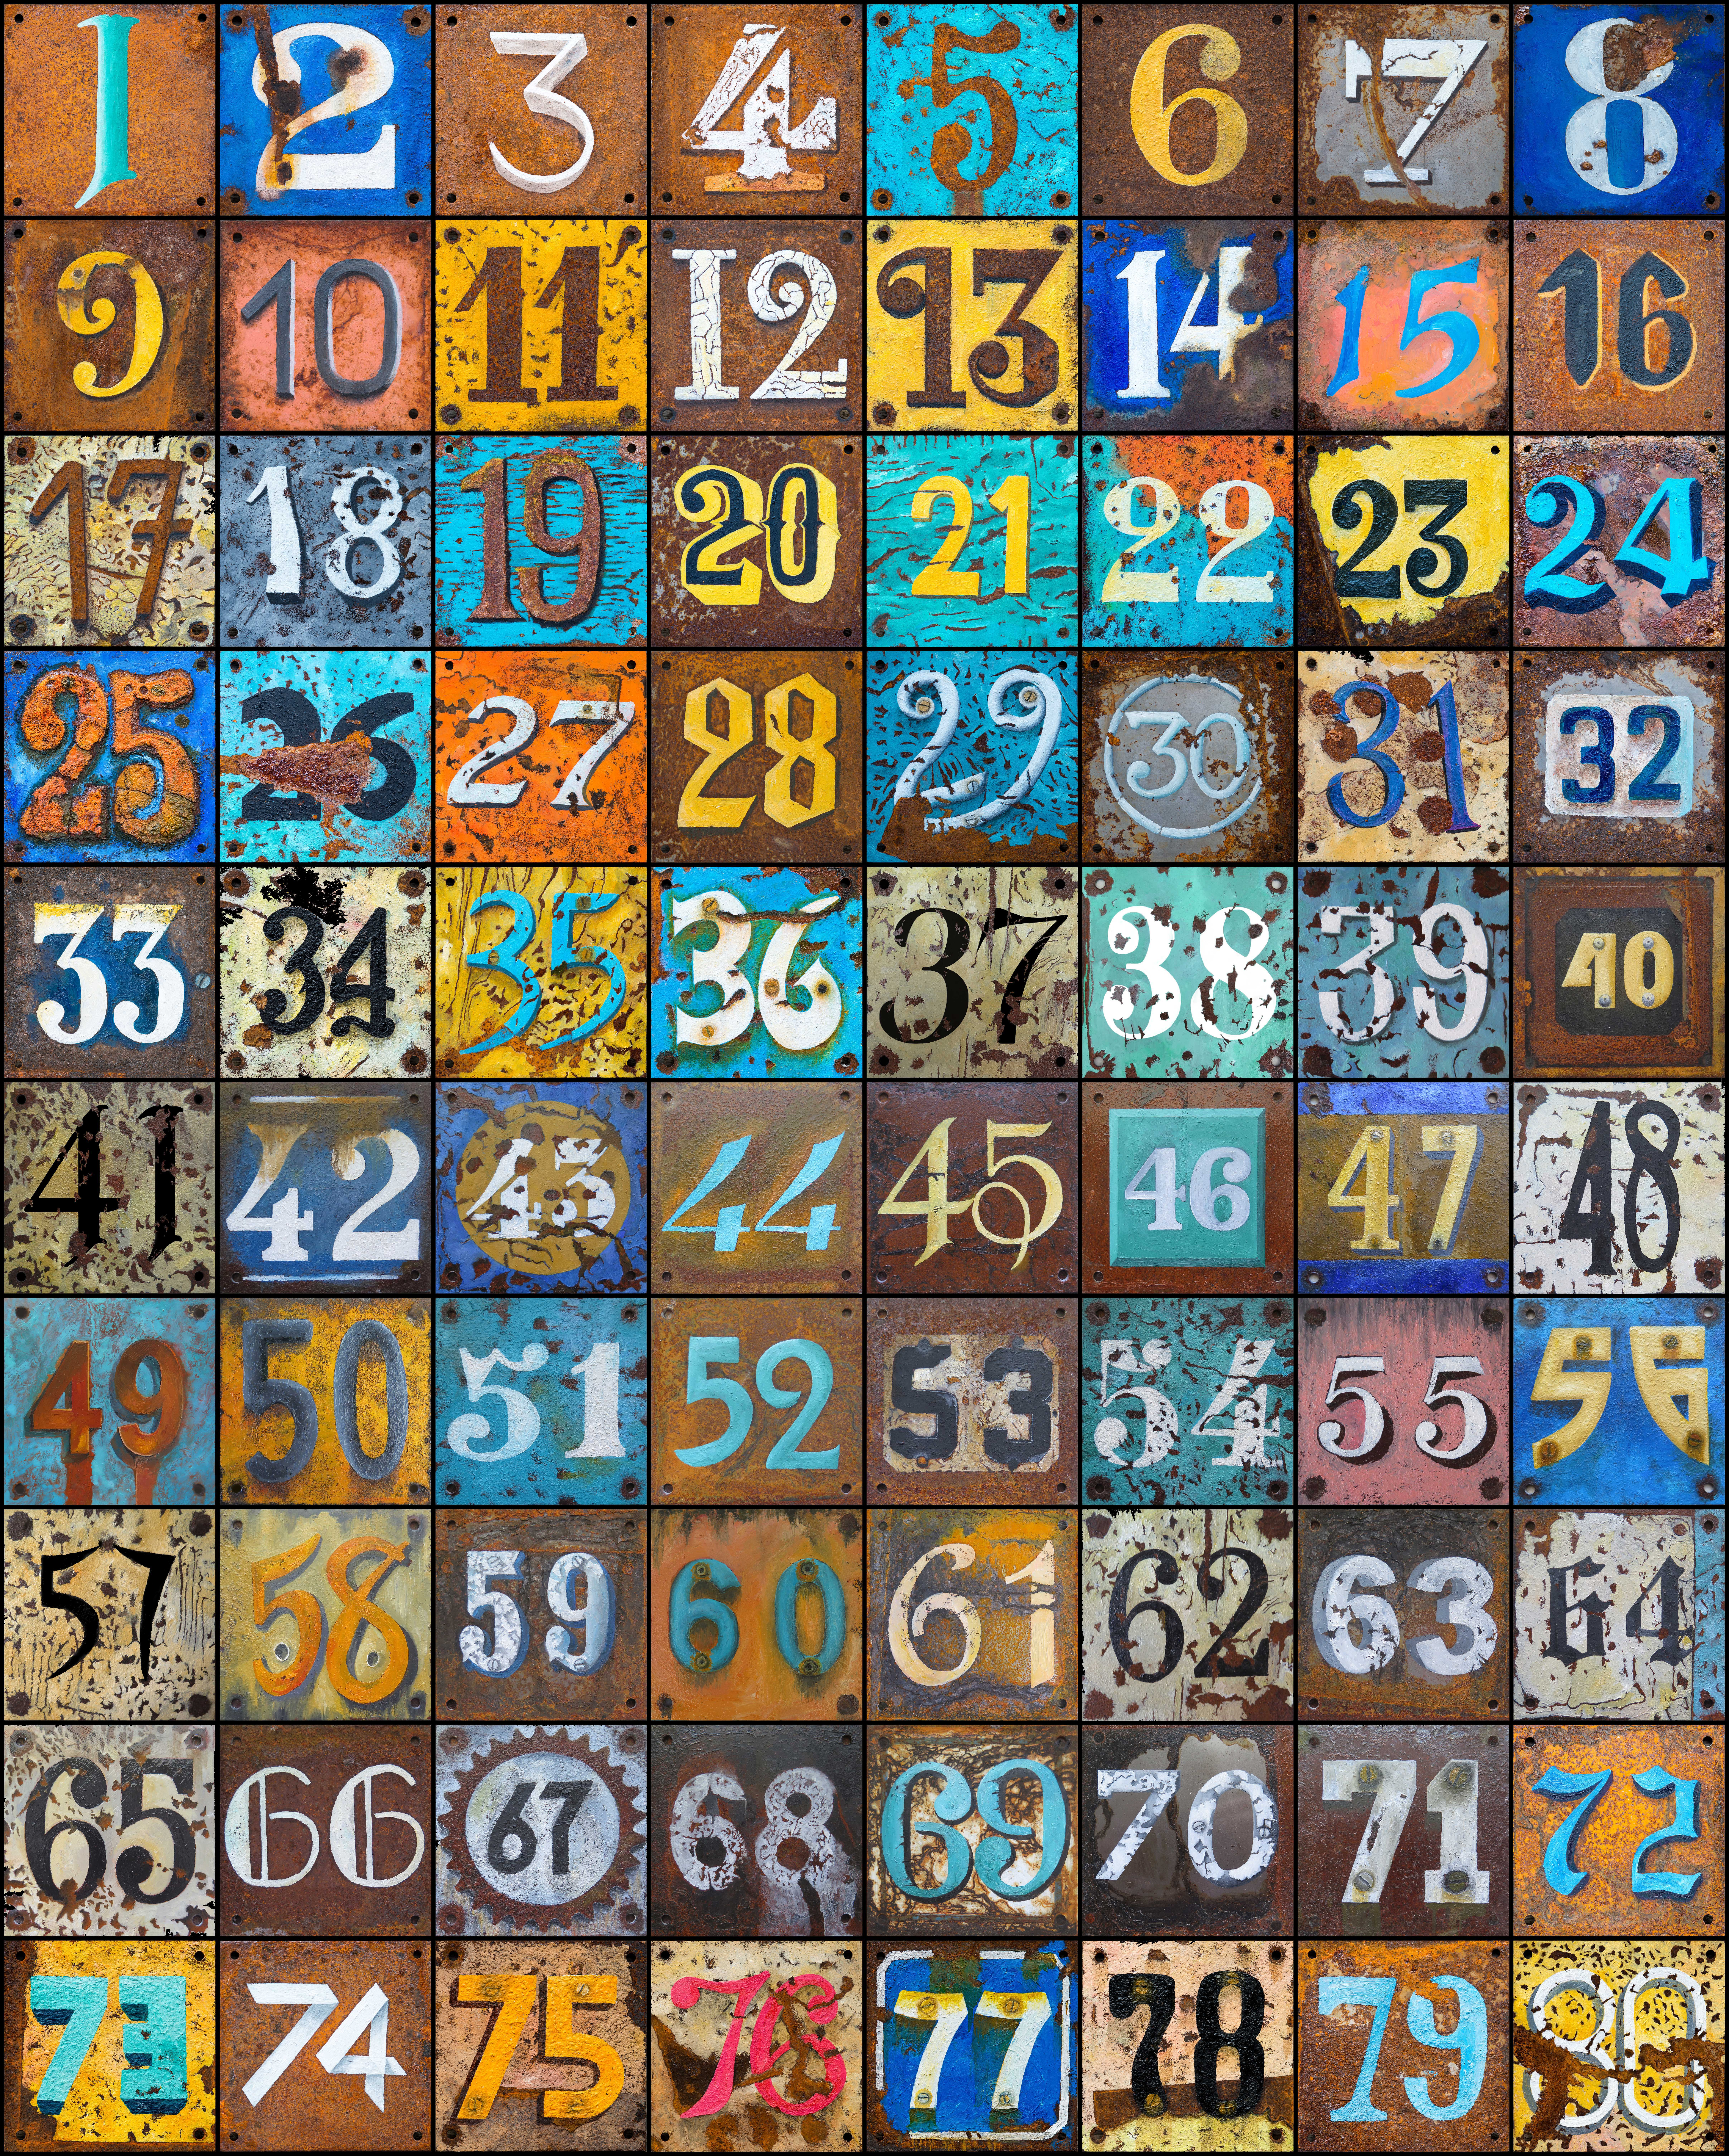 32k Wallpaper Motley texture, numbers, rust, multicolored